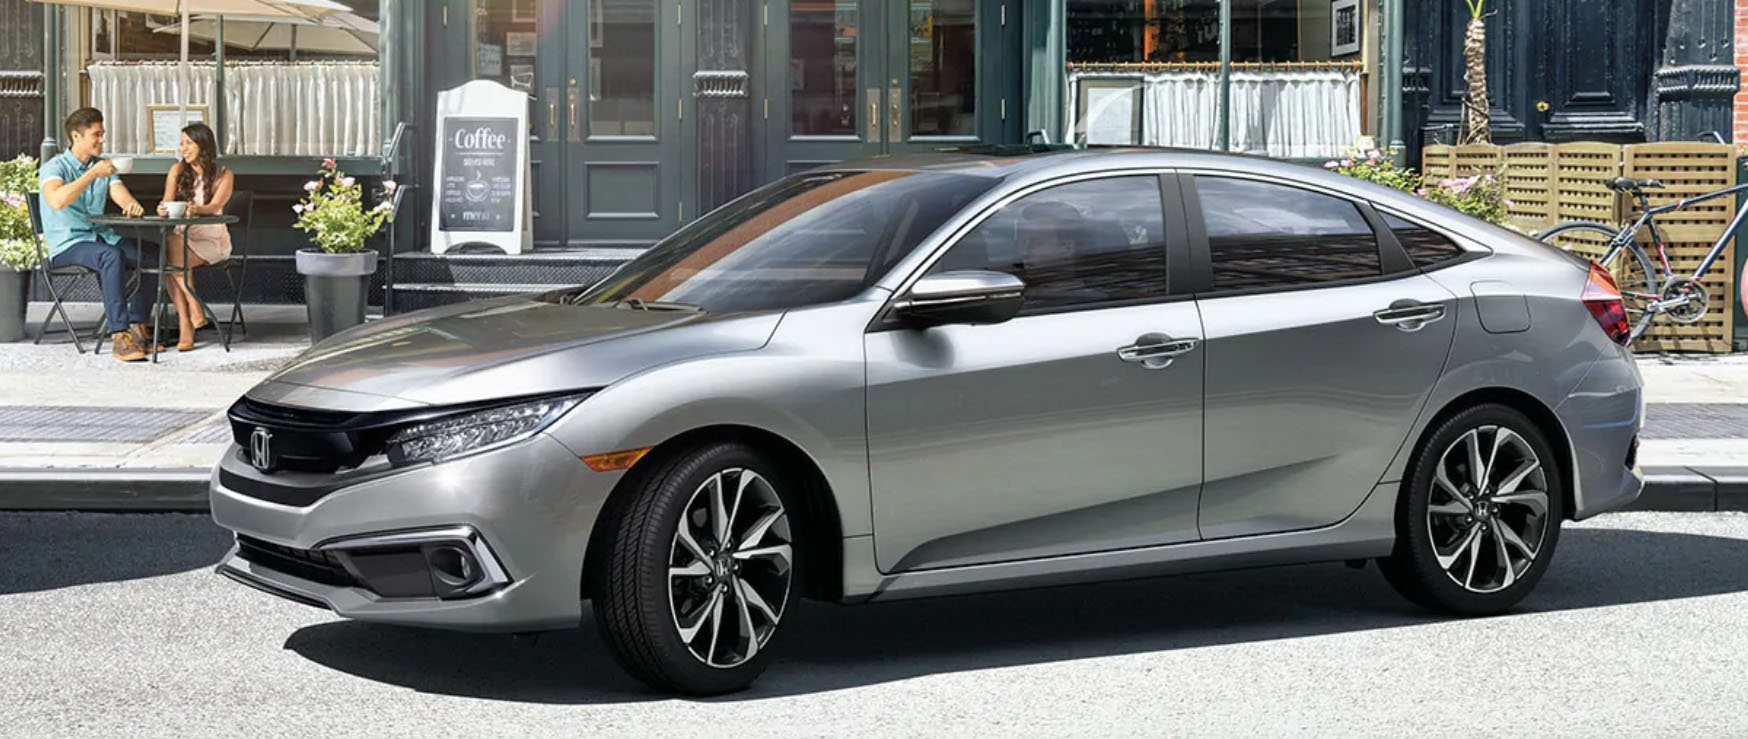 2020 Honda Civic Sedan For Sale in Kansas City